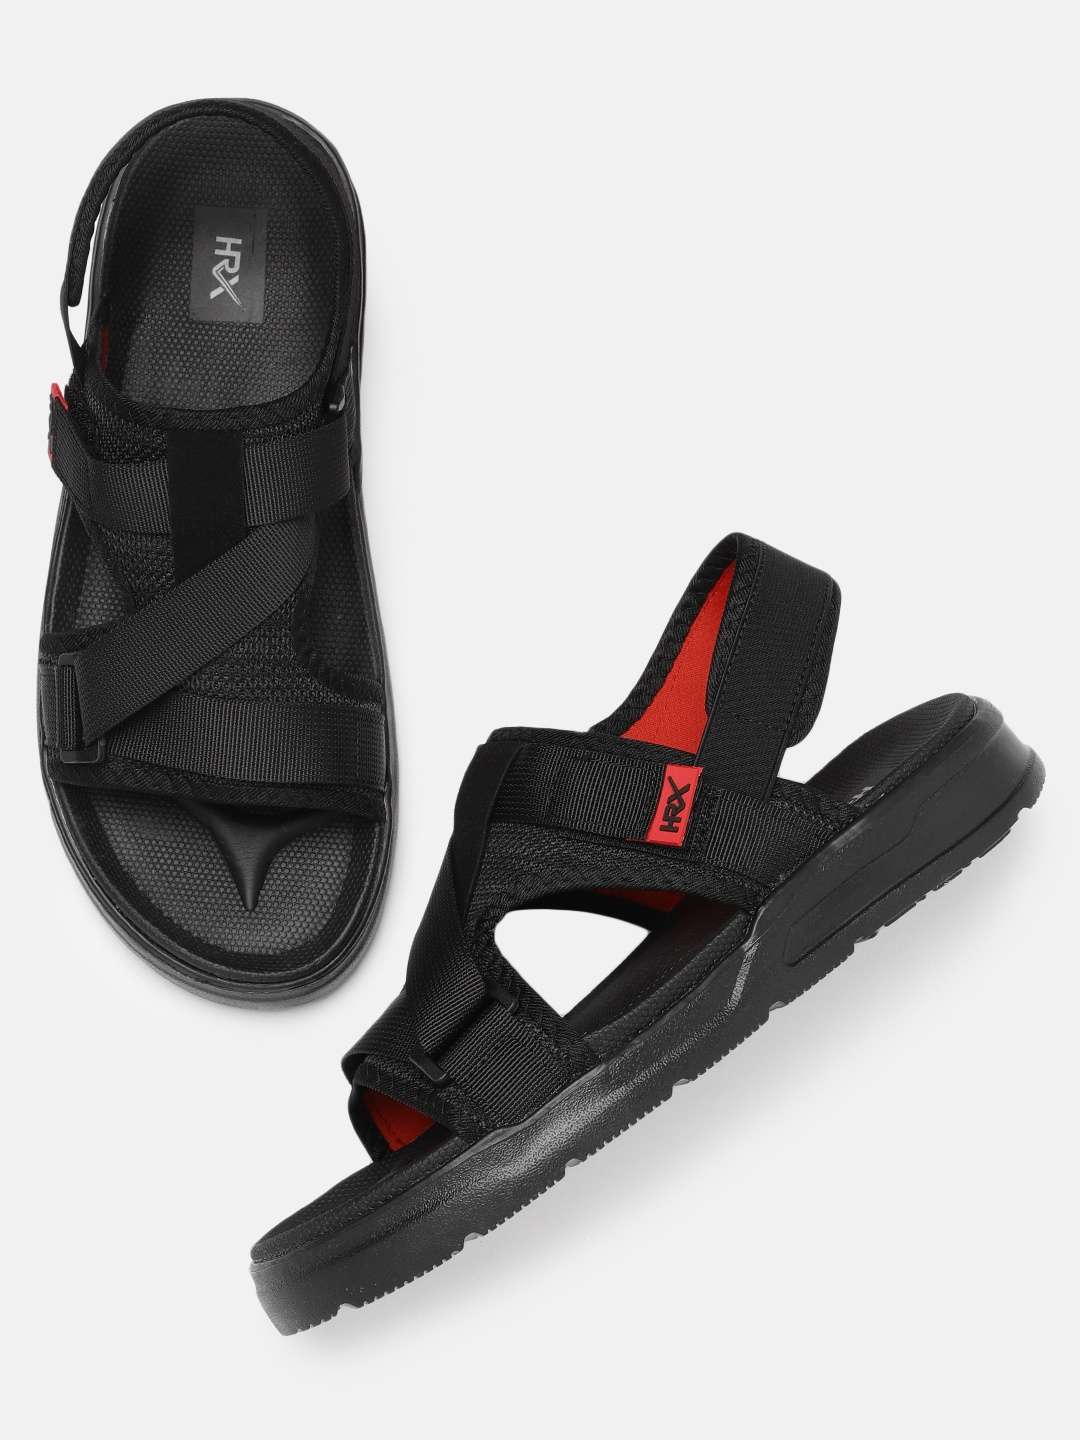 hrx sports sandals